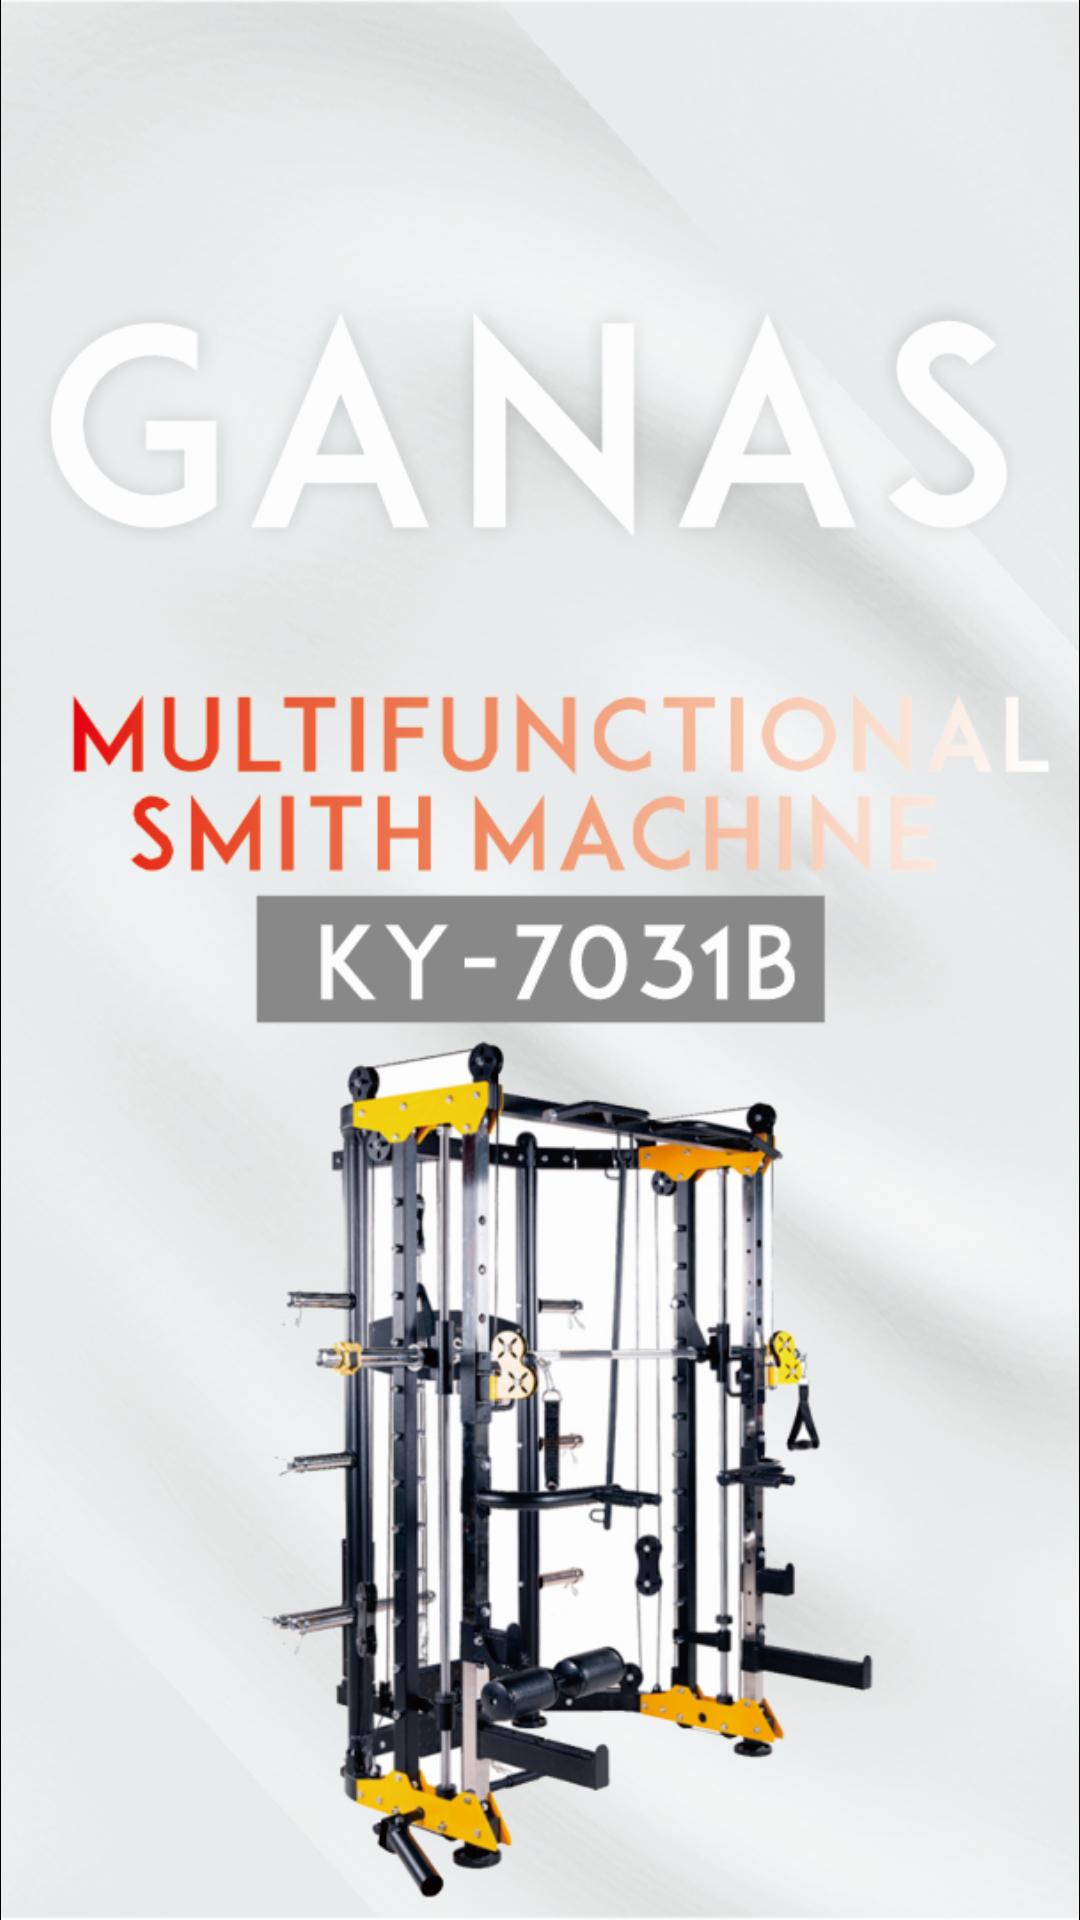 Smith machine for full-body exercise